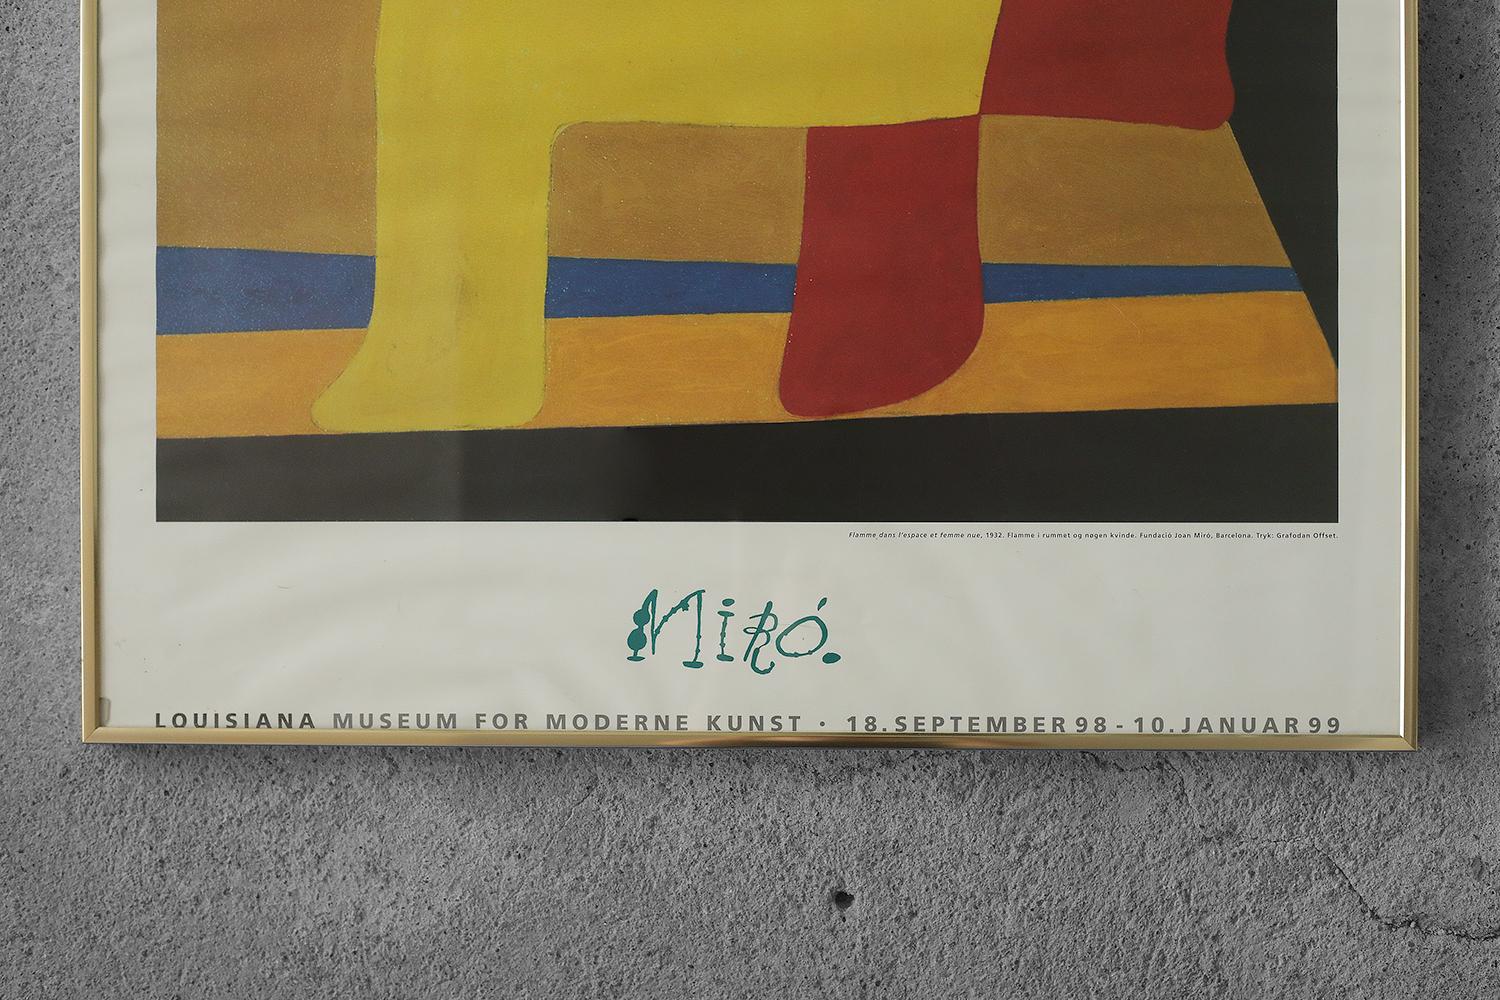 Plakat der Ausstellung Joan Miró, Louisiana Art Museum in Dänemark vom 18. September 1998 bis 10. Januar 1999. Das Werk 